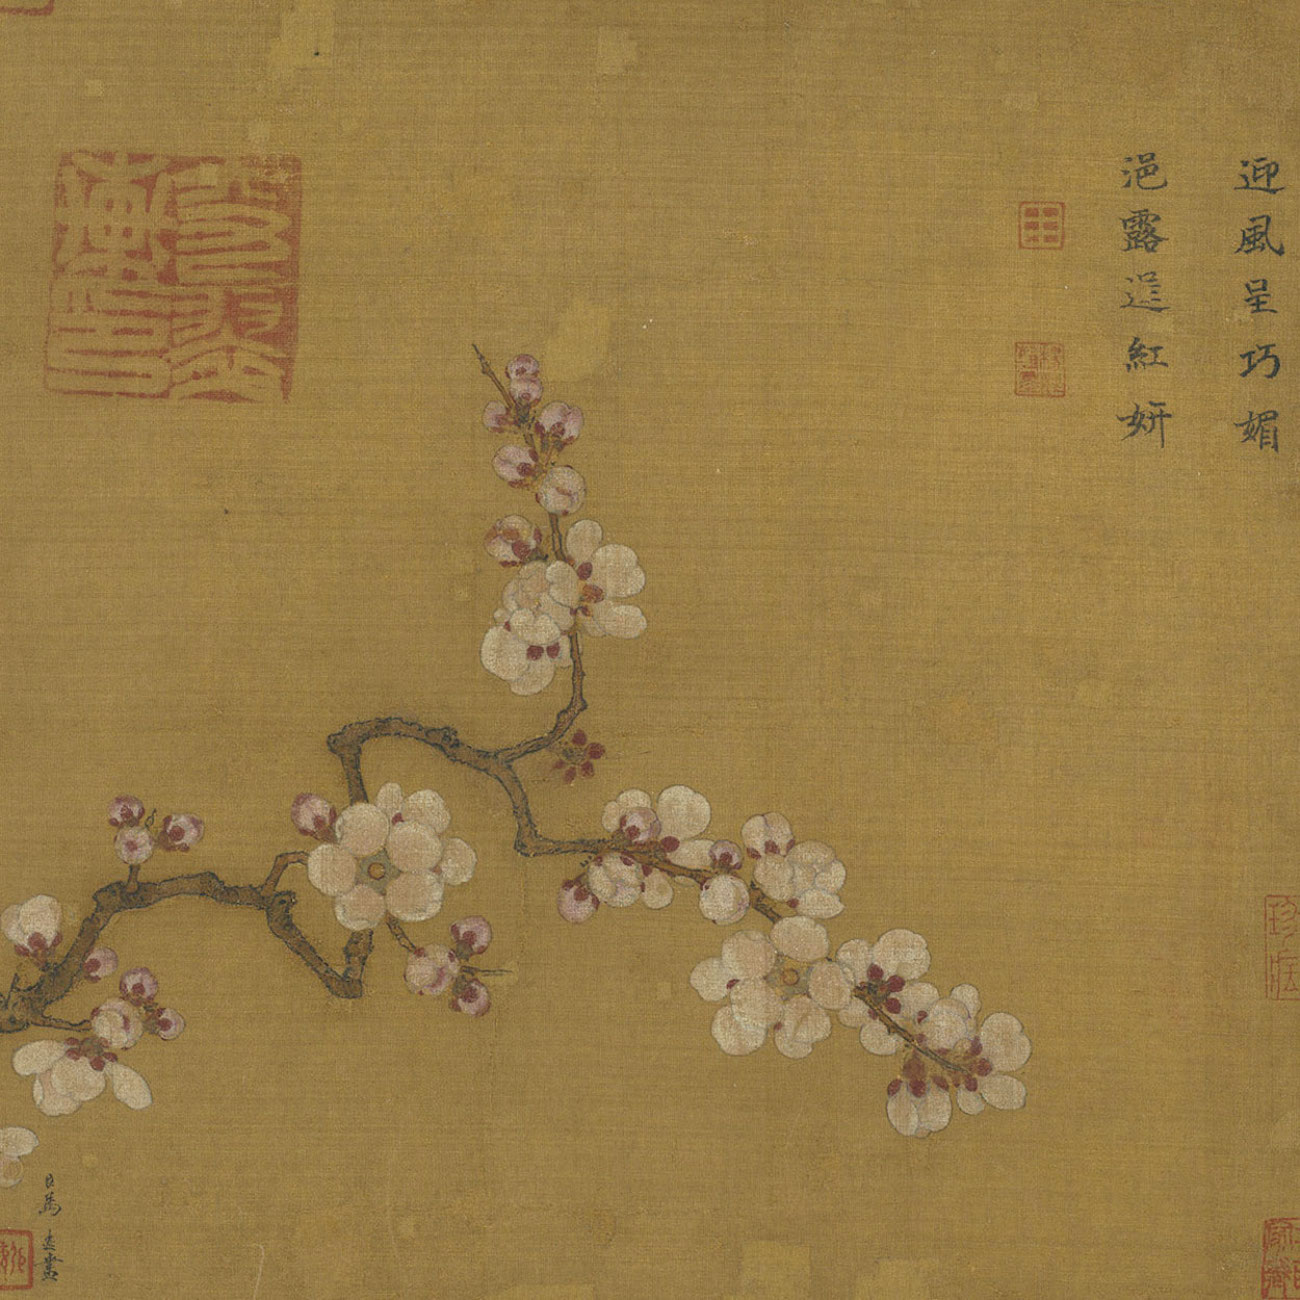 Apricot Blossoms by Ma Yuan - 1202 - 25.8 x 27.3 cm National Palace Museum, Taipei